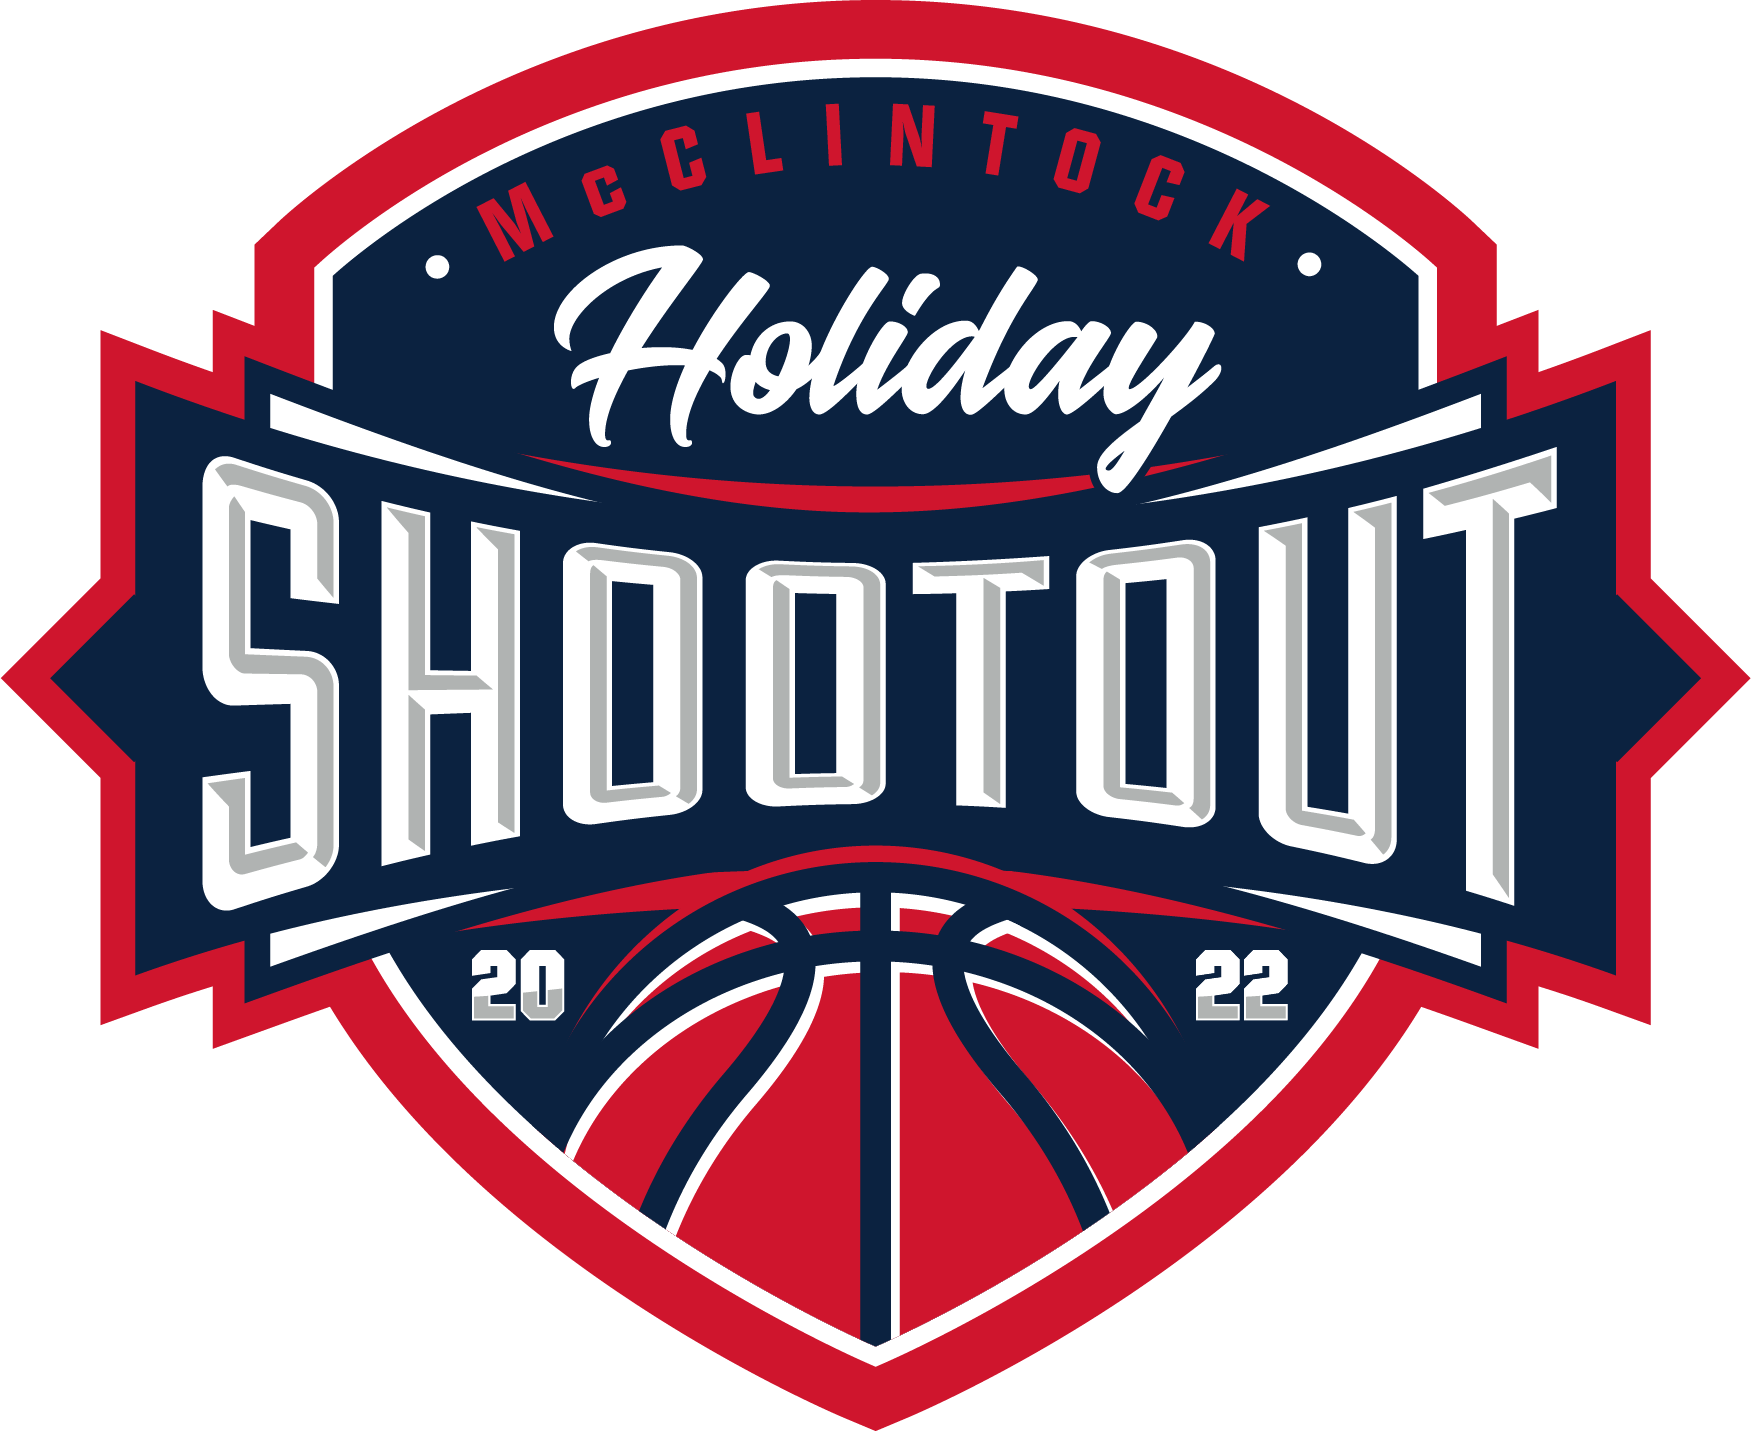 McClintock Chargers Holiday Shootout logo